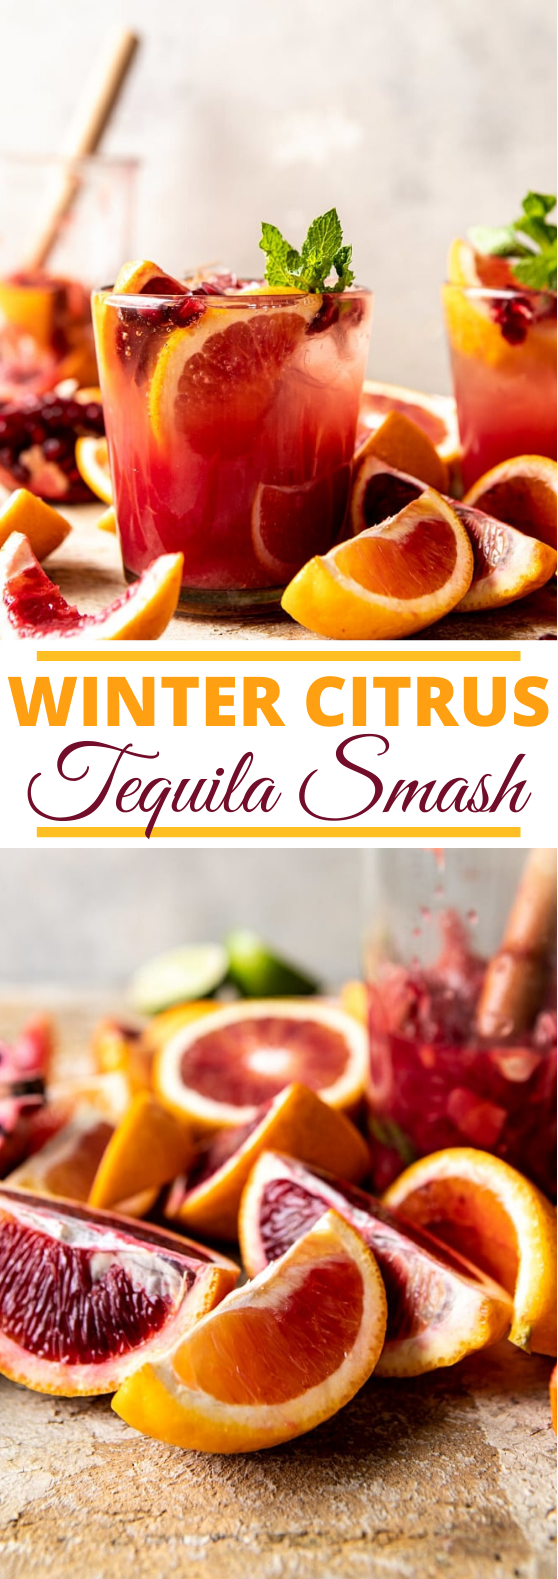 Winter Citrus Tequila Smash #drink #cocktails #tequila #winter #beverages